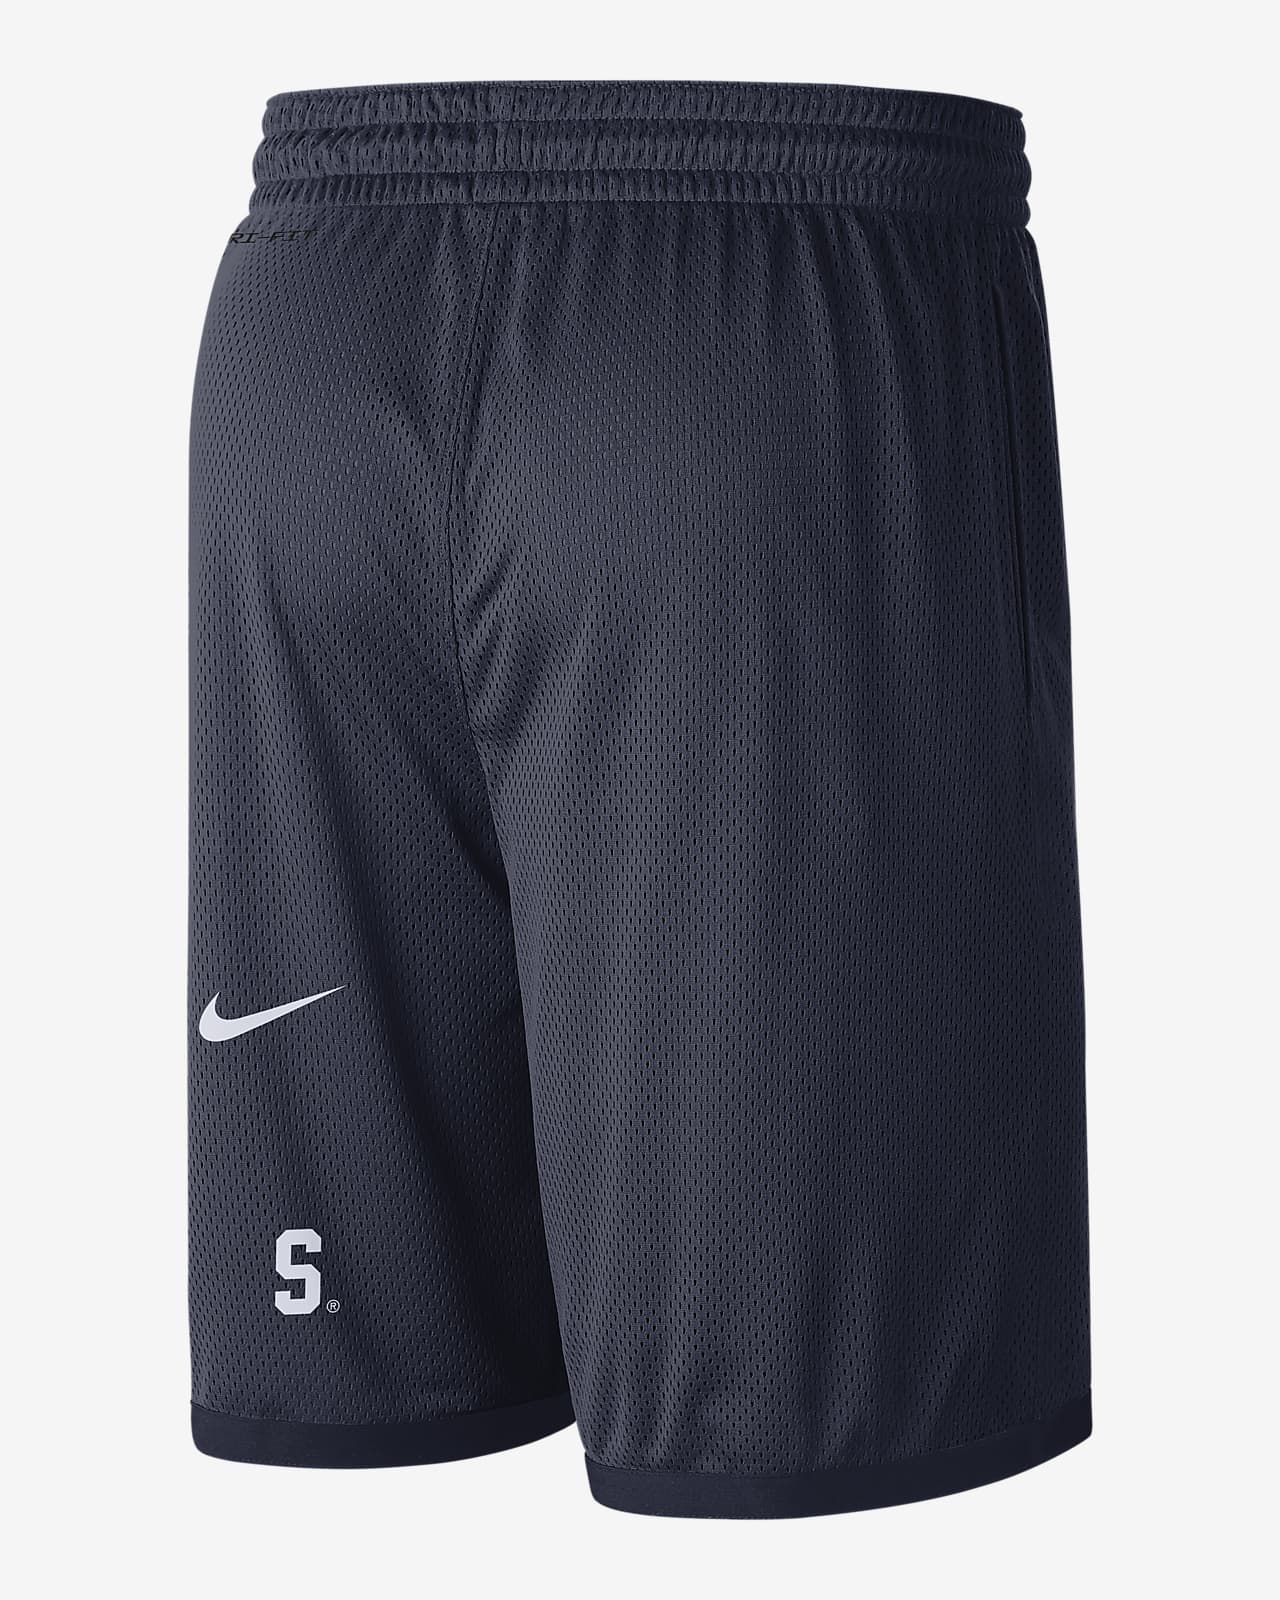 Men's Dri-FIT College Shorts. Nike.com